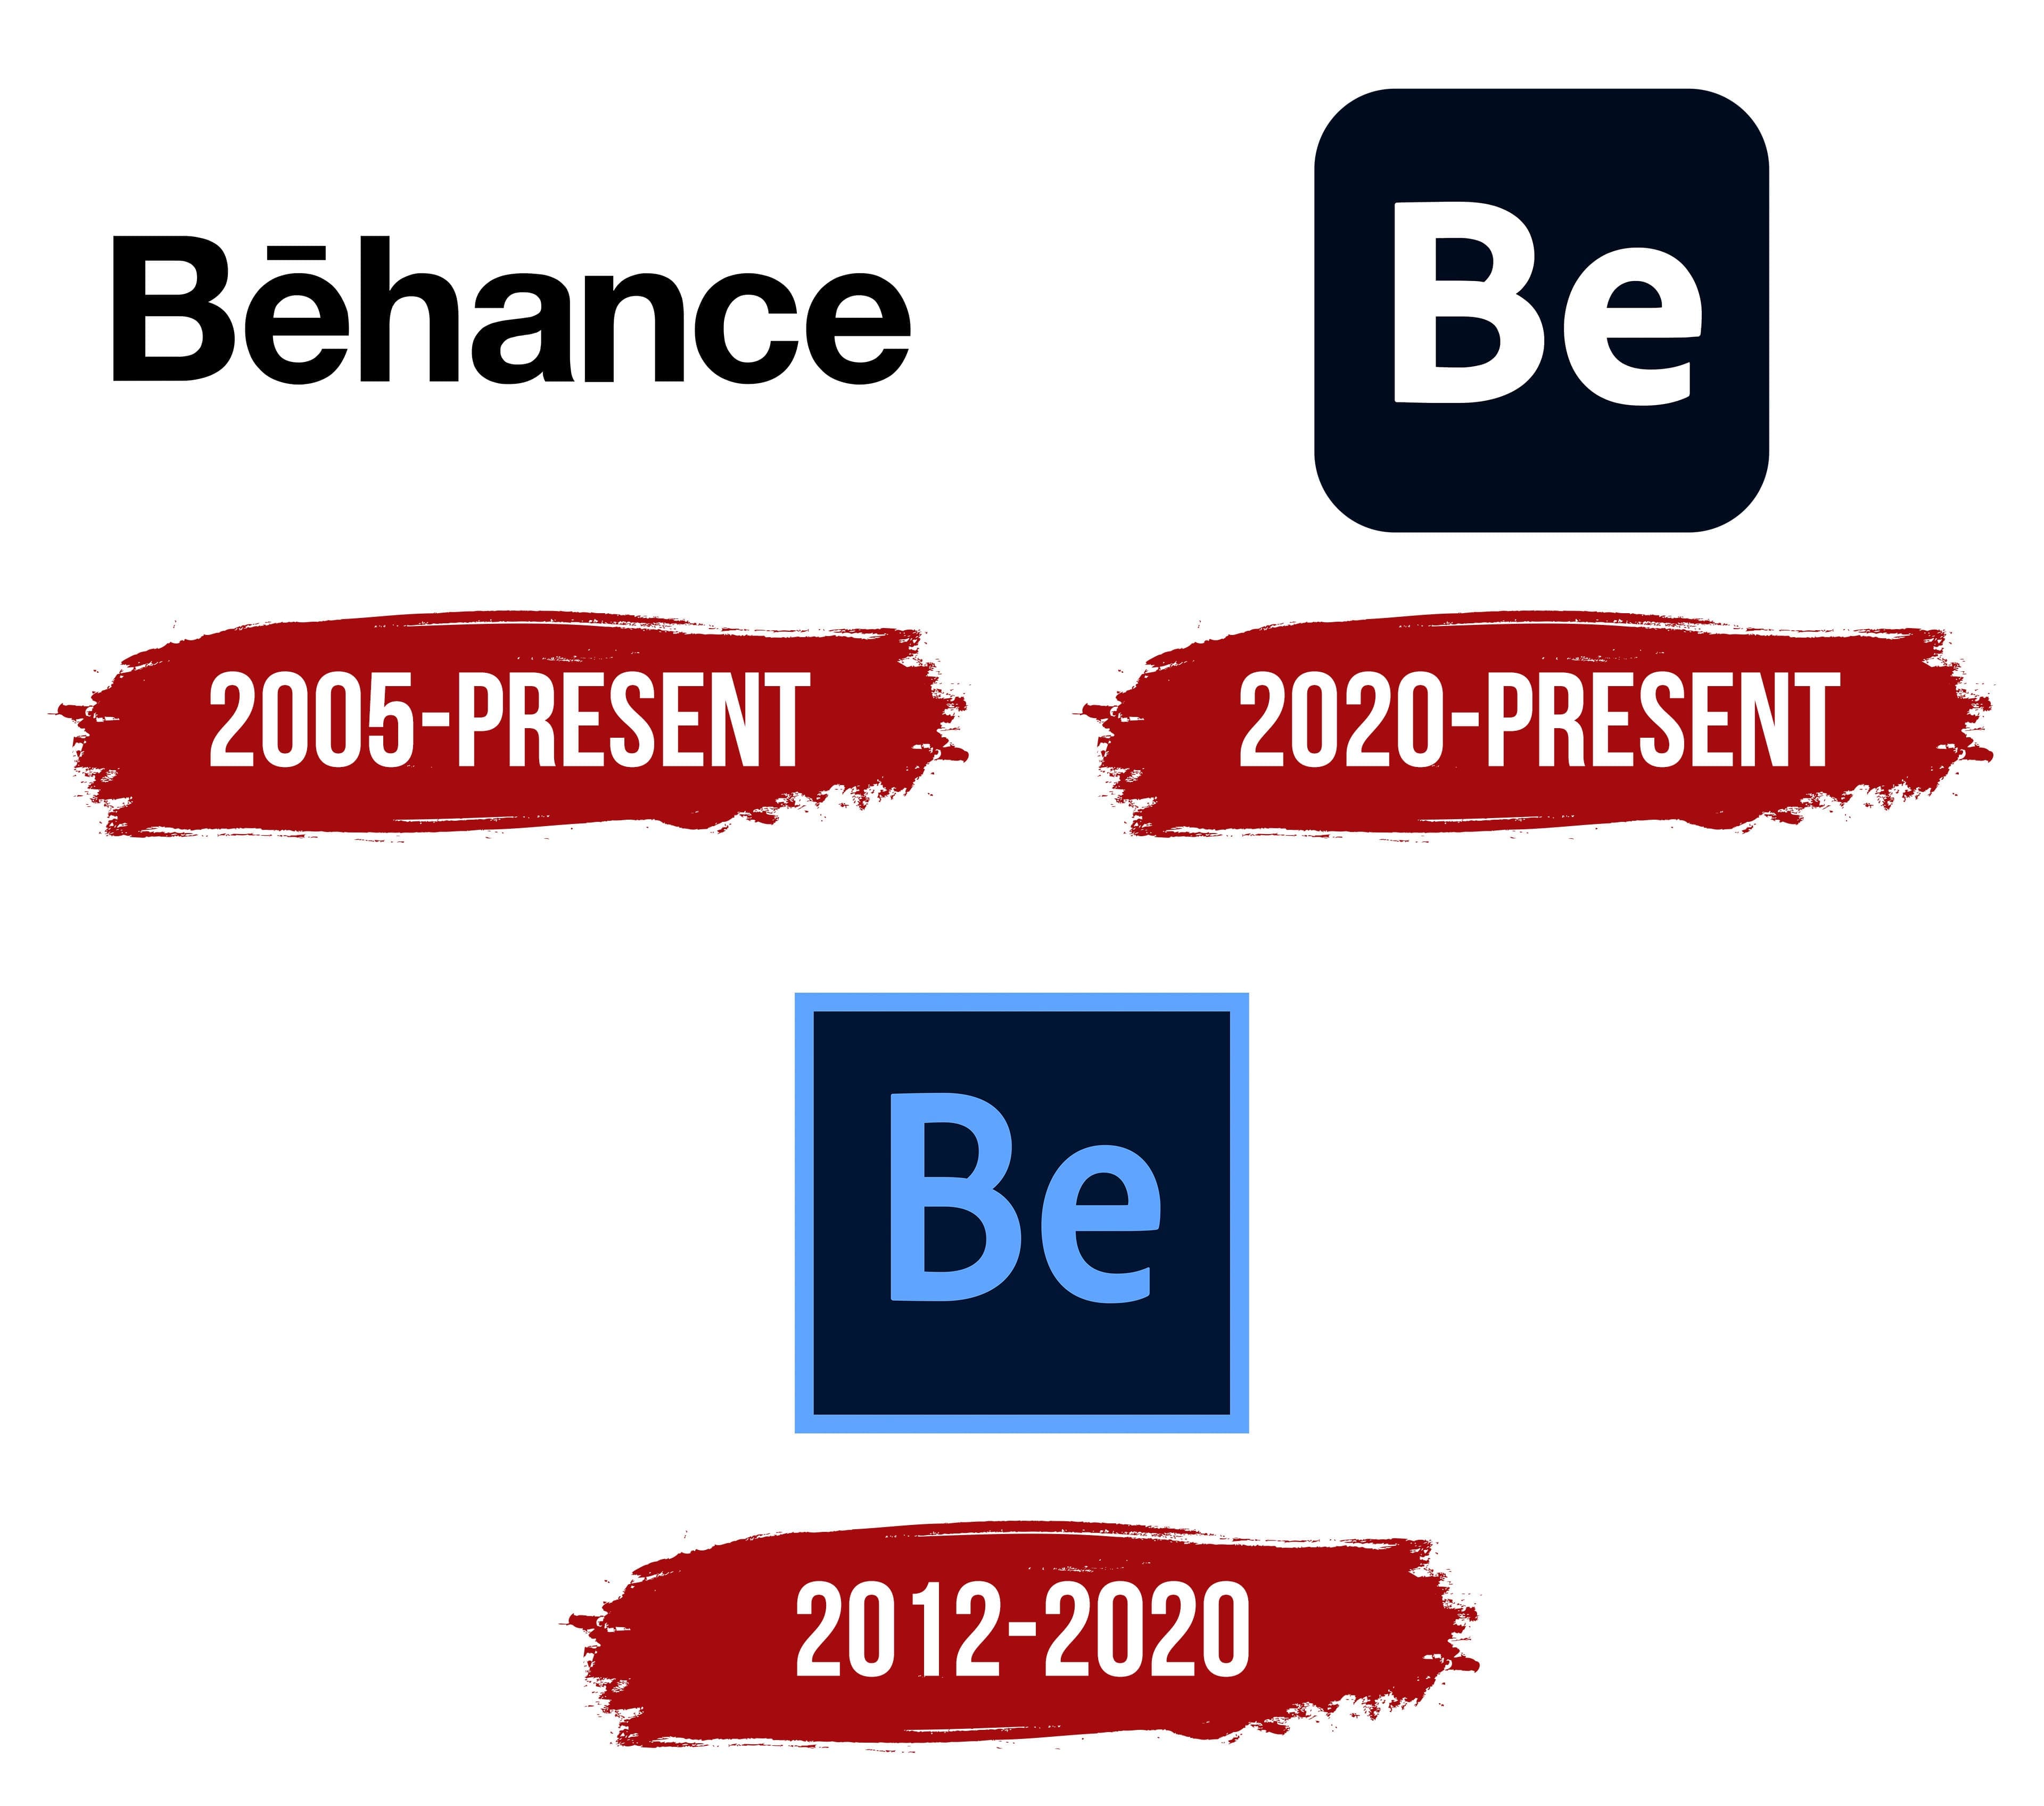 behance logo